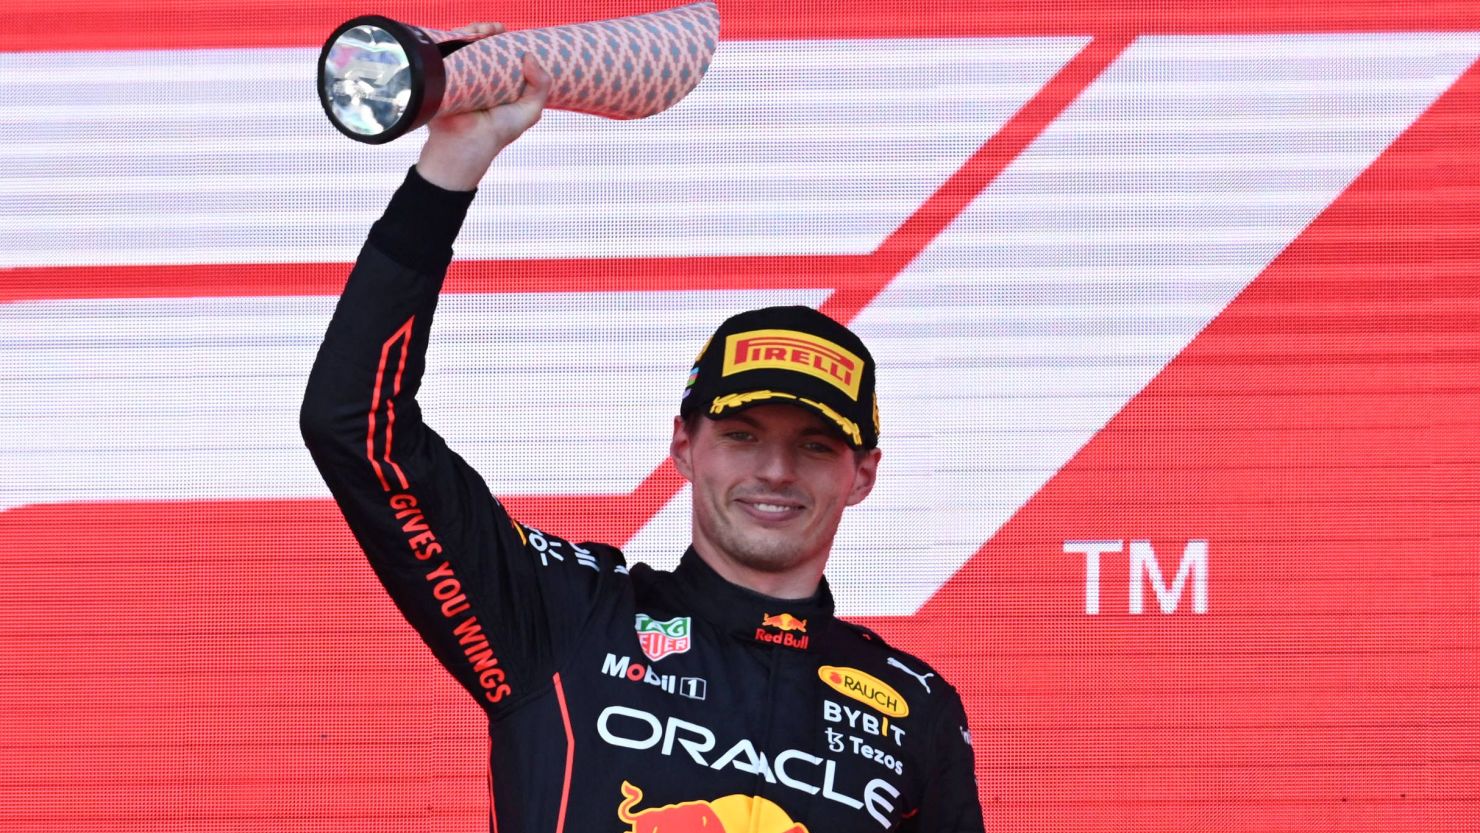 Max Verstappen celebrates after winning the Azerbaijan Grand Prix.